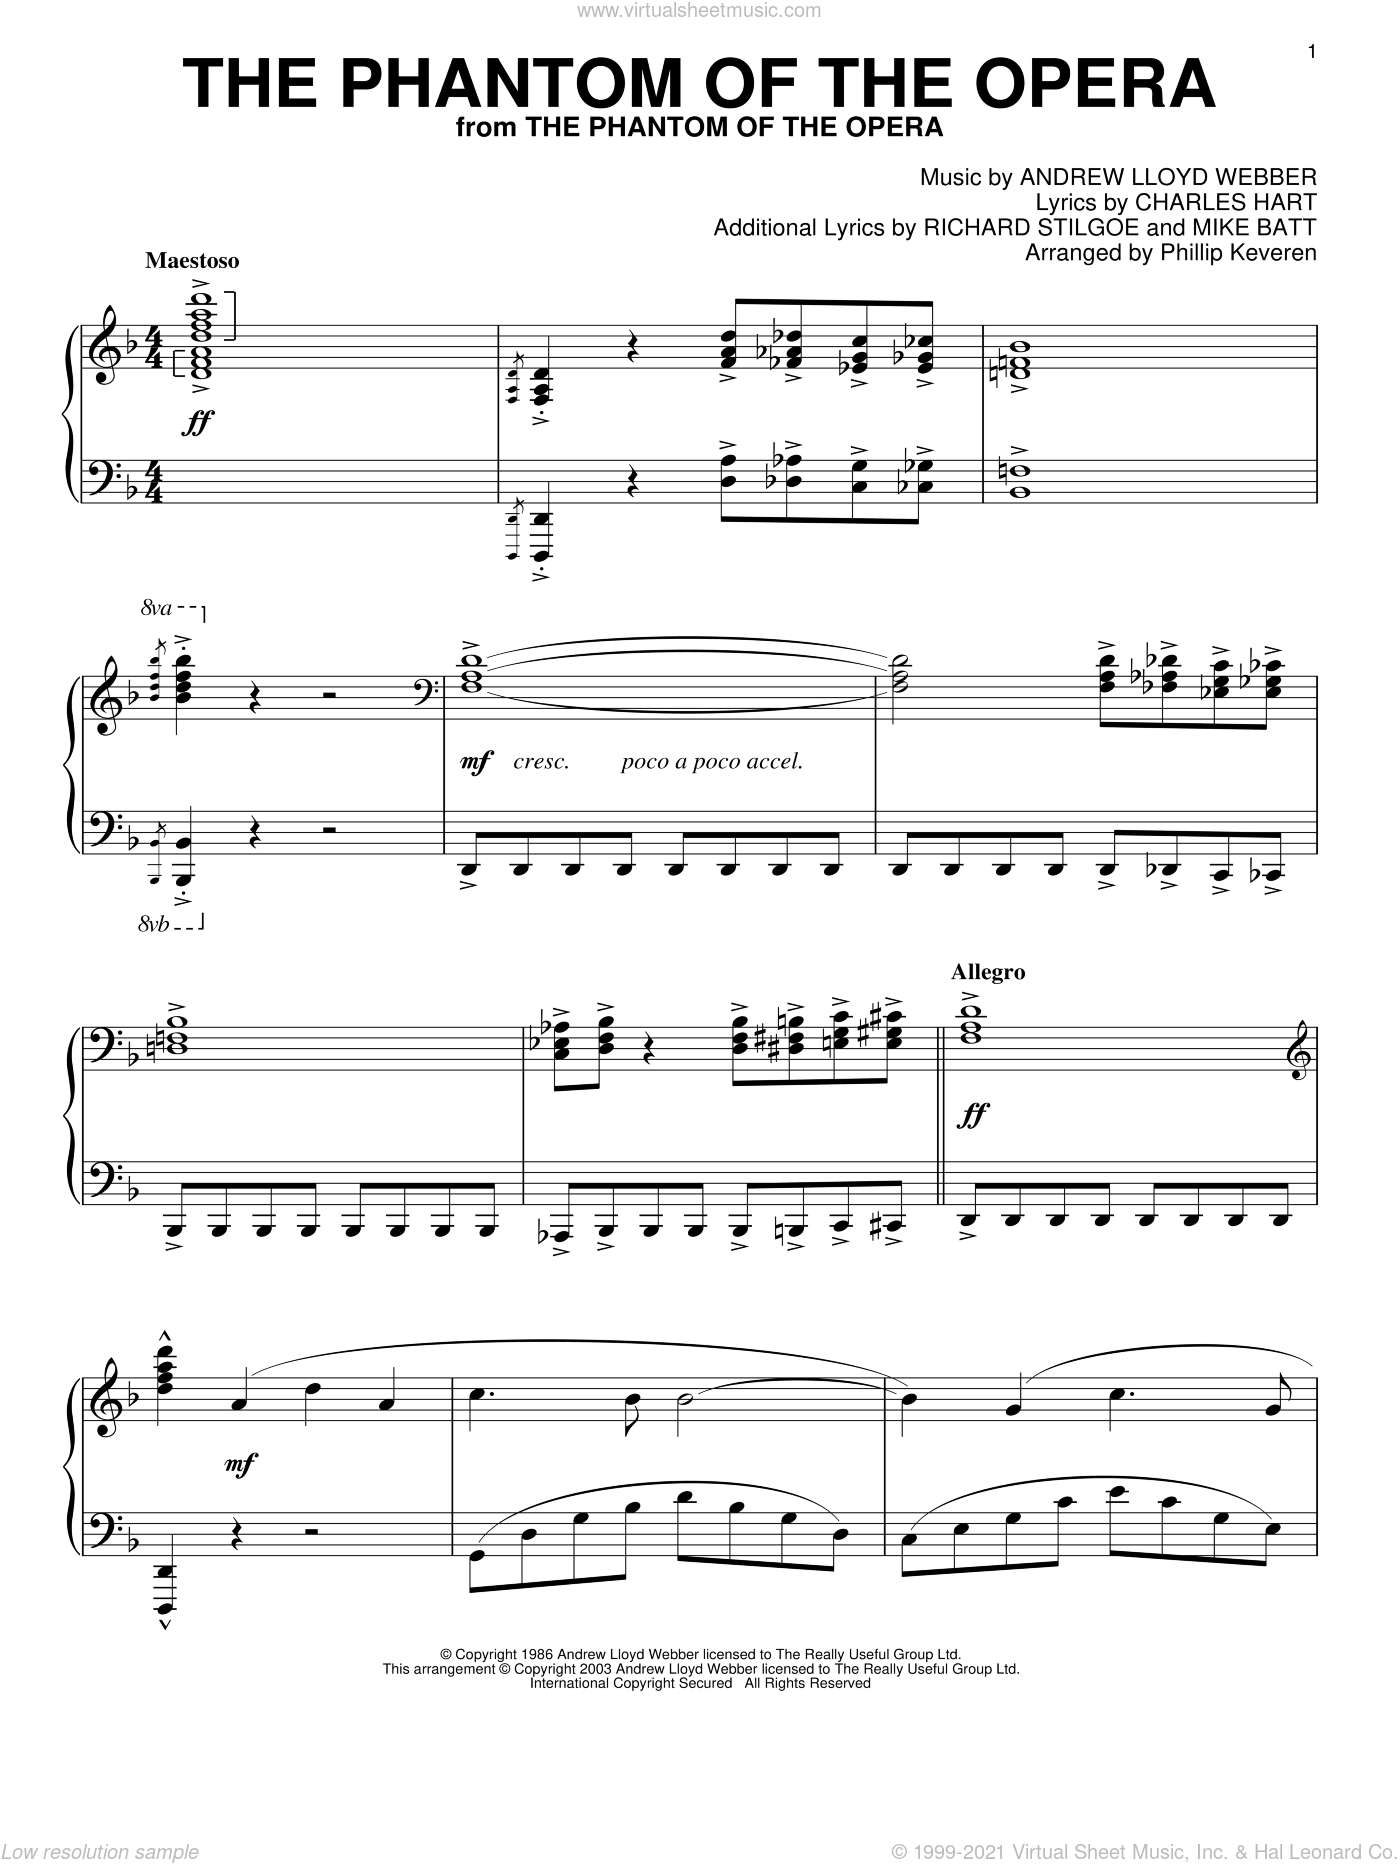 Beginner Phantom Of The Opera Piano Sheet Music : Music of the Night (Phantom of the Opera) | Sheet music, Piano music, Music - The phantom of the opera ~ piano solo.pdf.